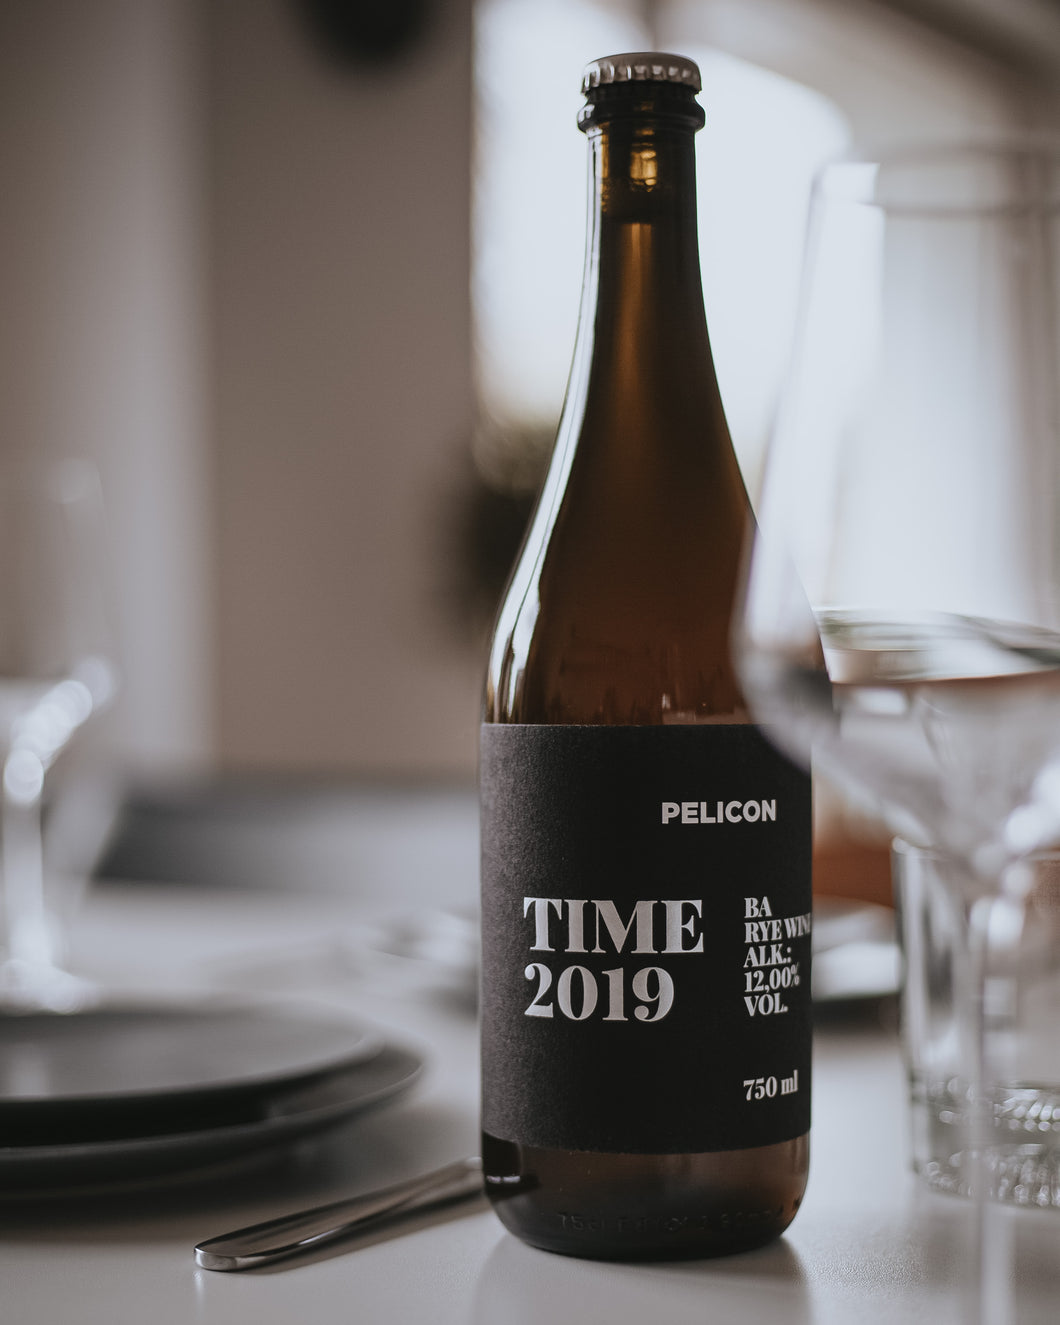 Time 2019, Rye wine